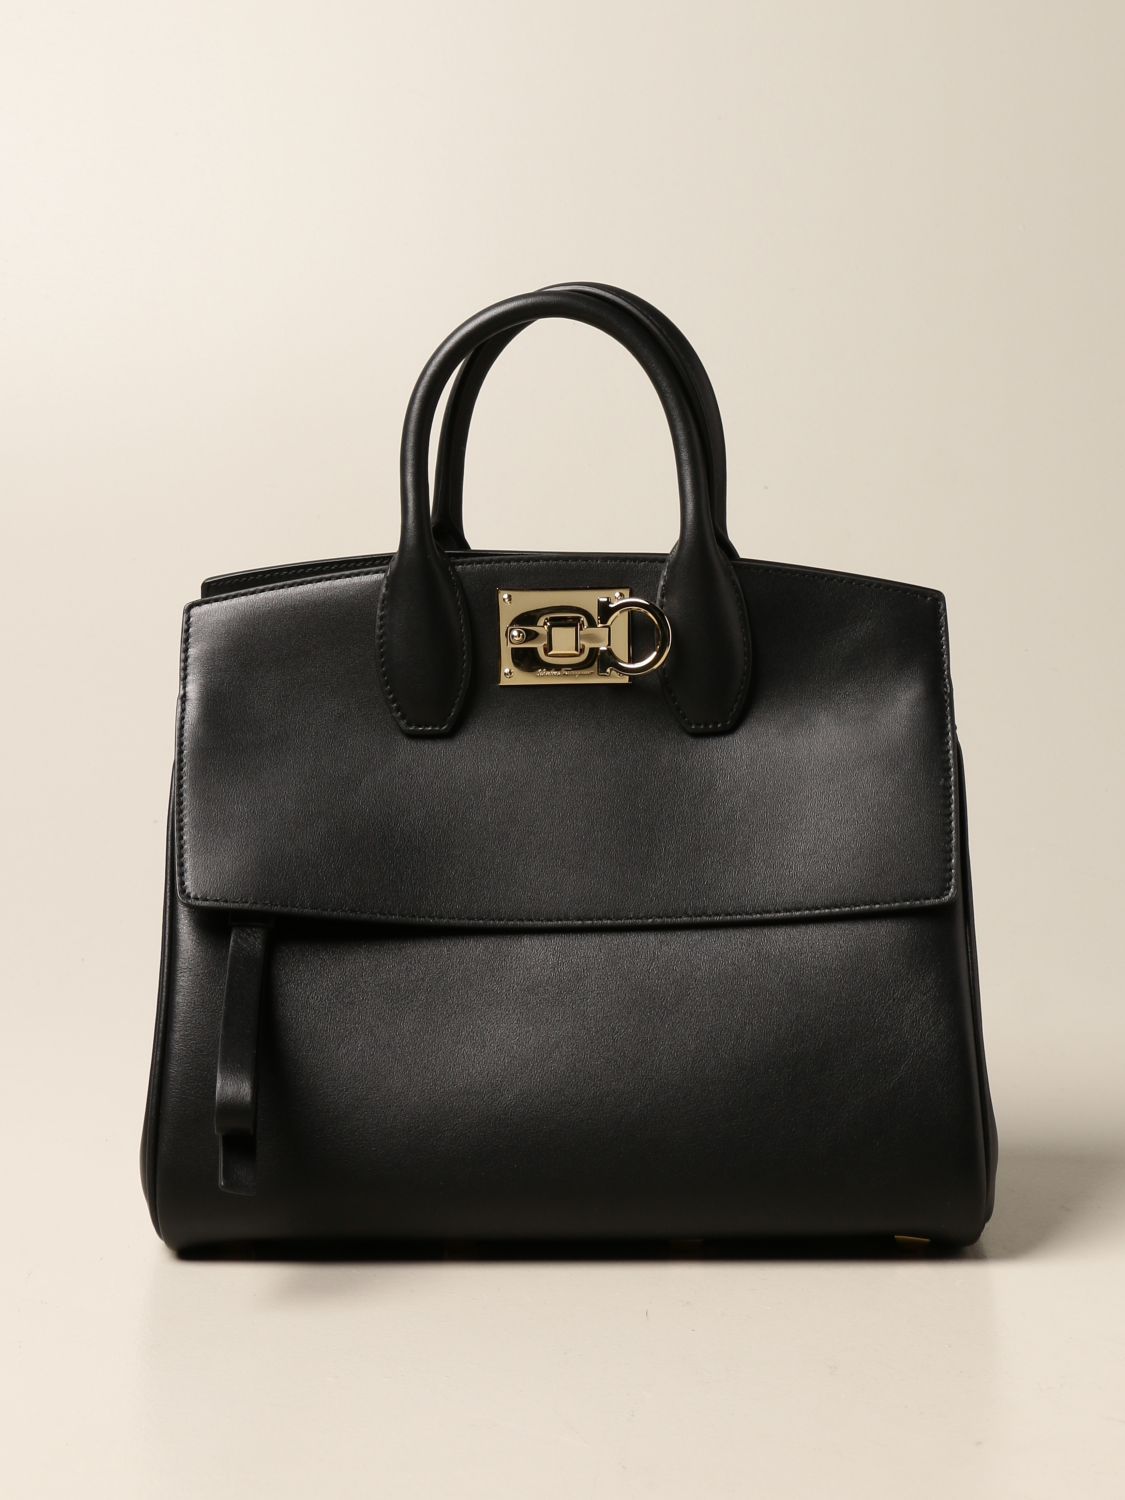 FERRAGAMO: The Studio bag in textured leather - Black | Ferragamo ...